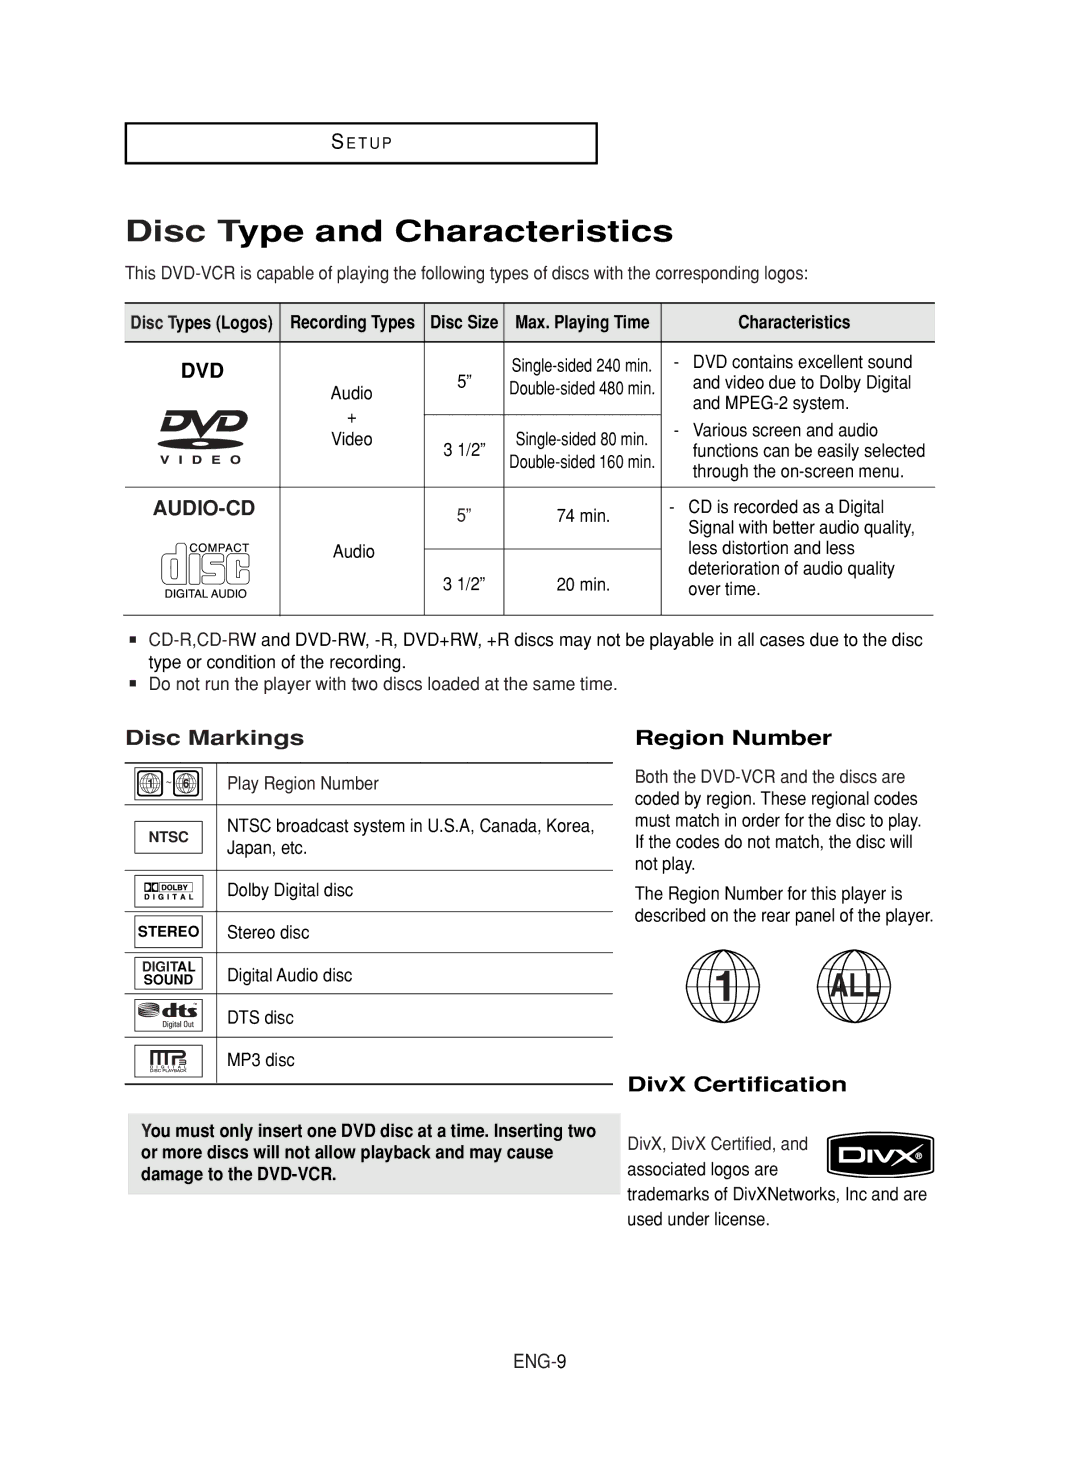 Samsung DVD-V9800 instruction manual Disc Type and Characteristics, Disc Markings, Region Number, DivX Certification 